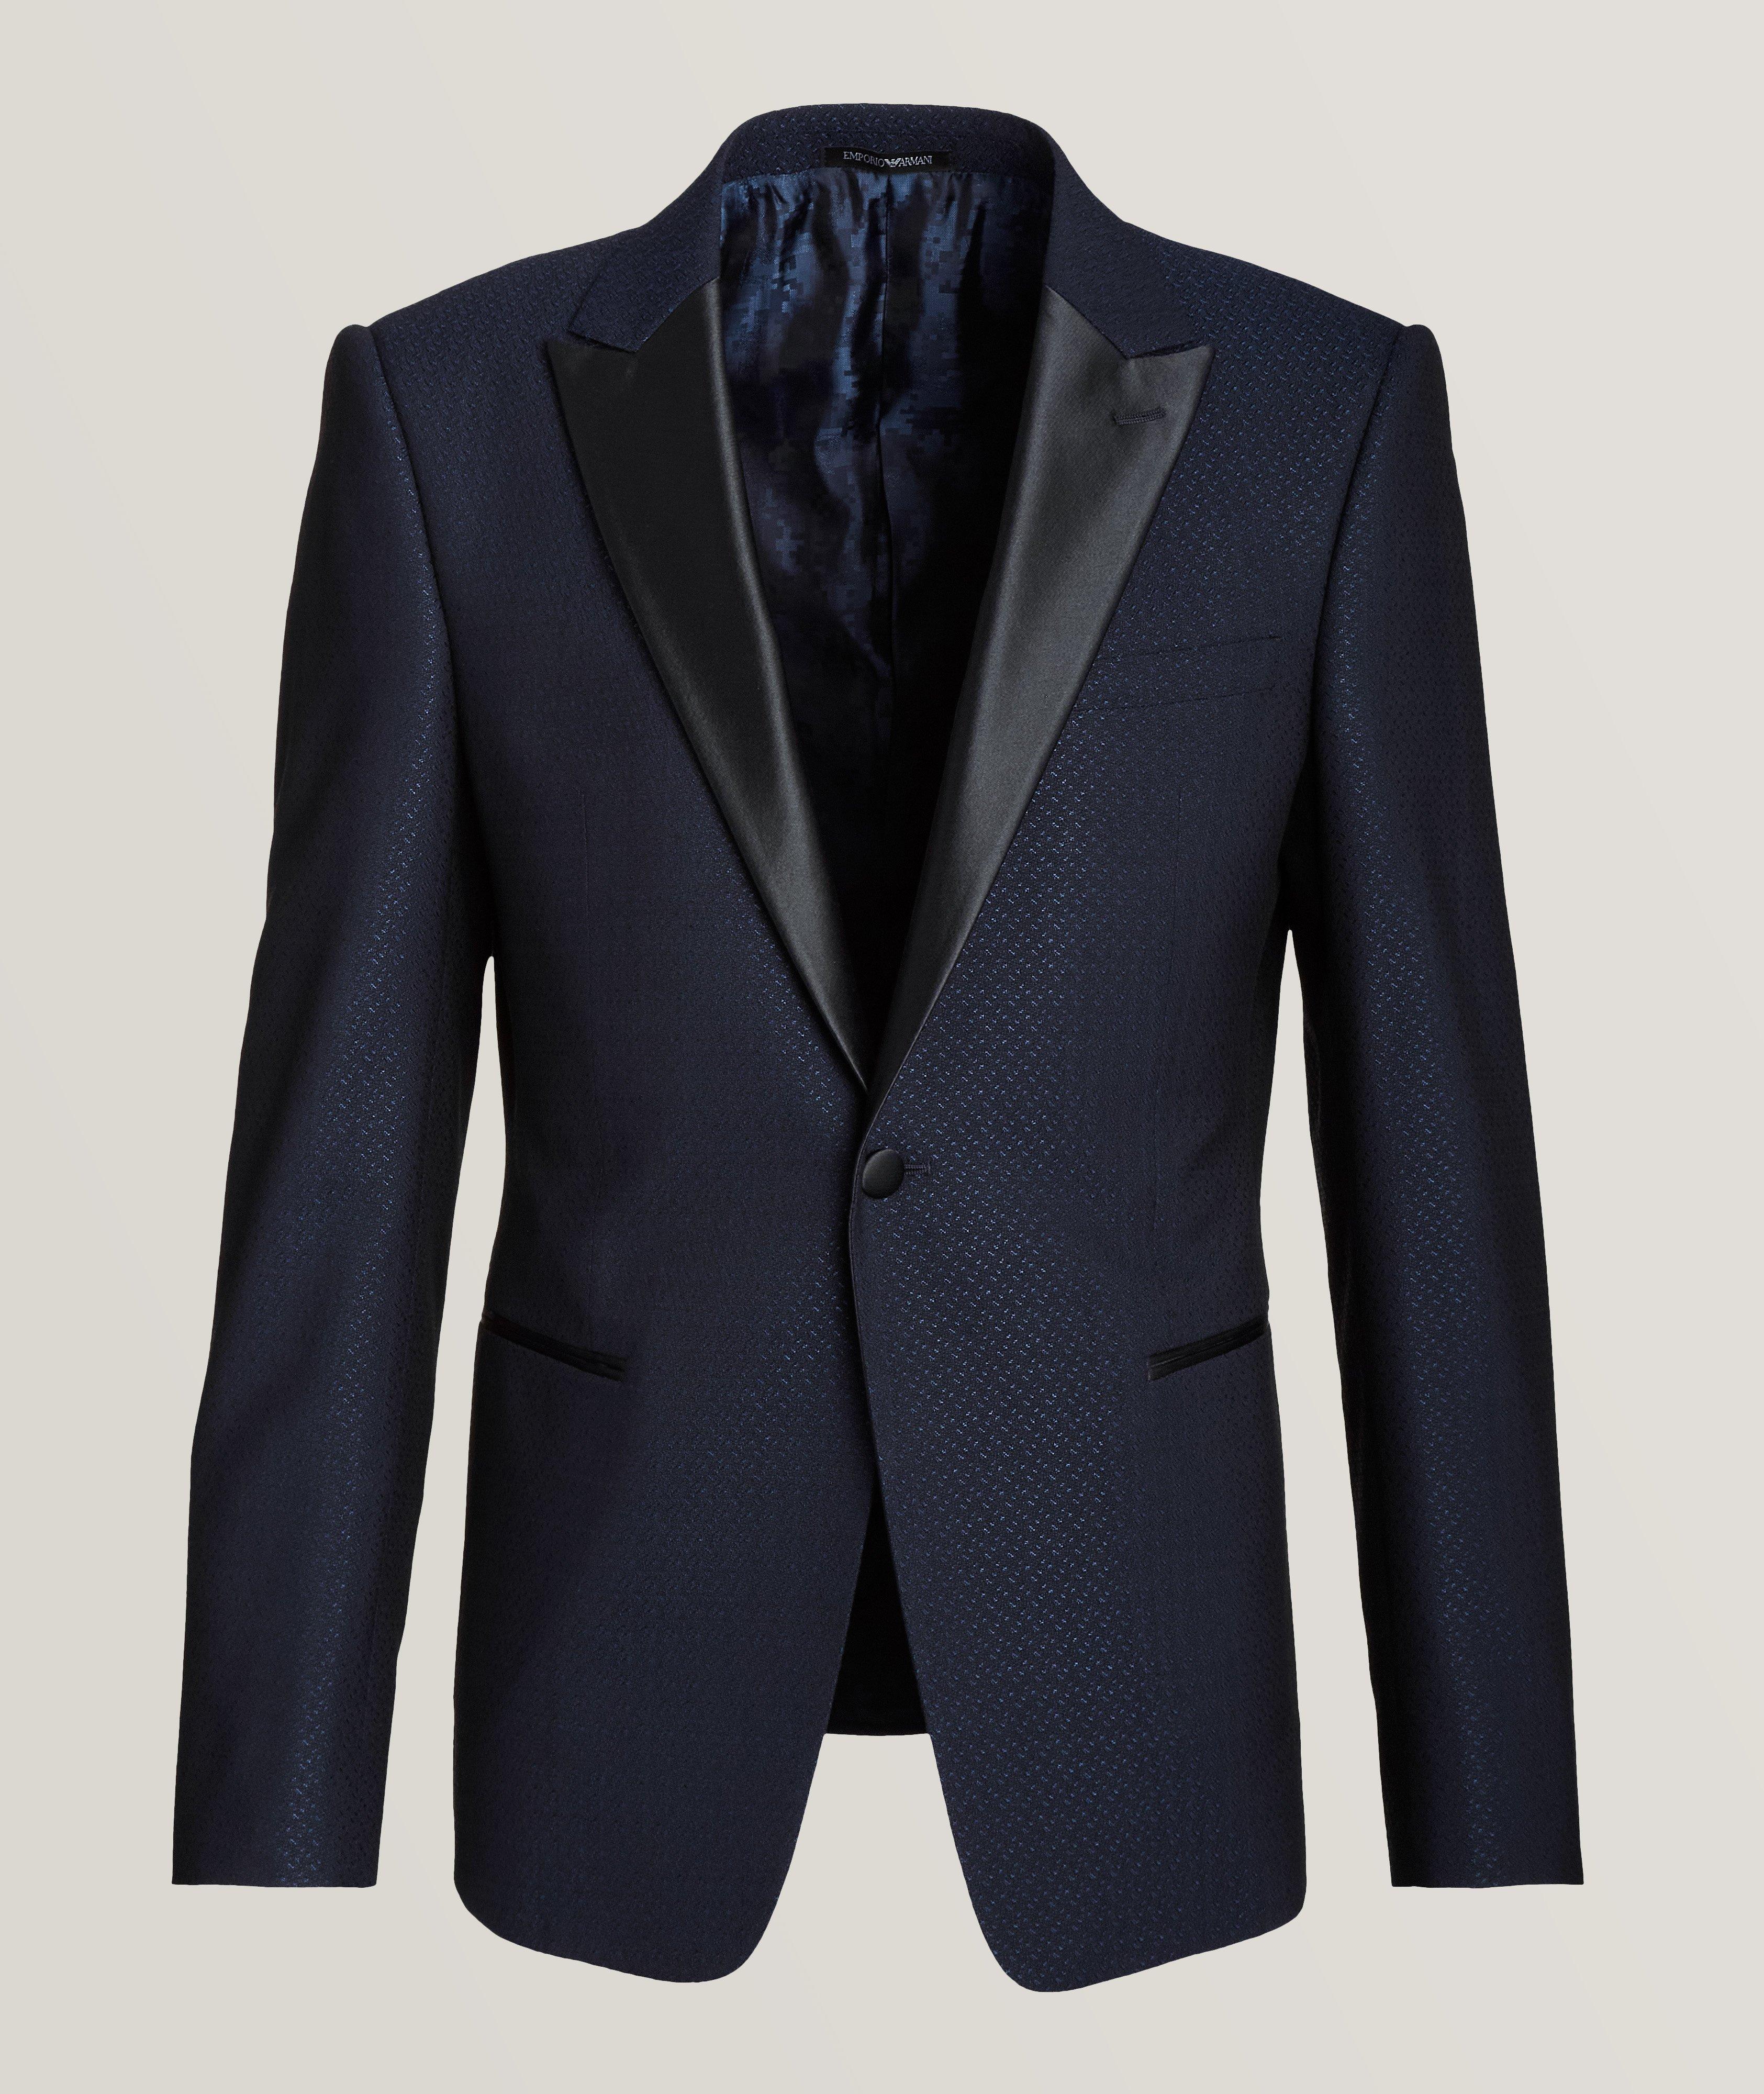 David Line Jacquard Wool-Silk Tuxedo Jacket image 0